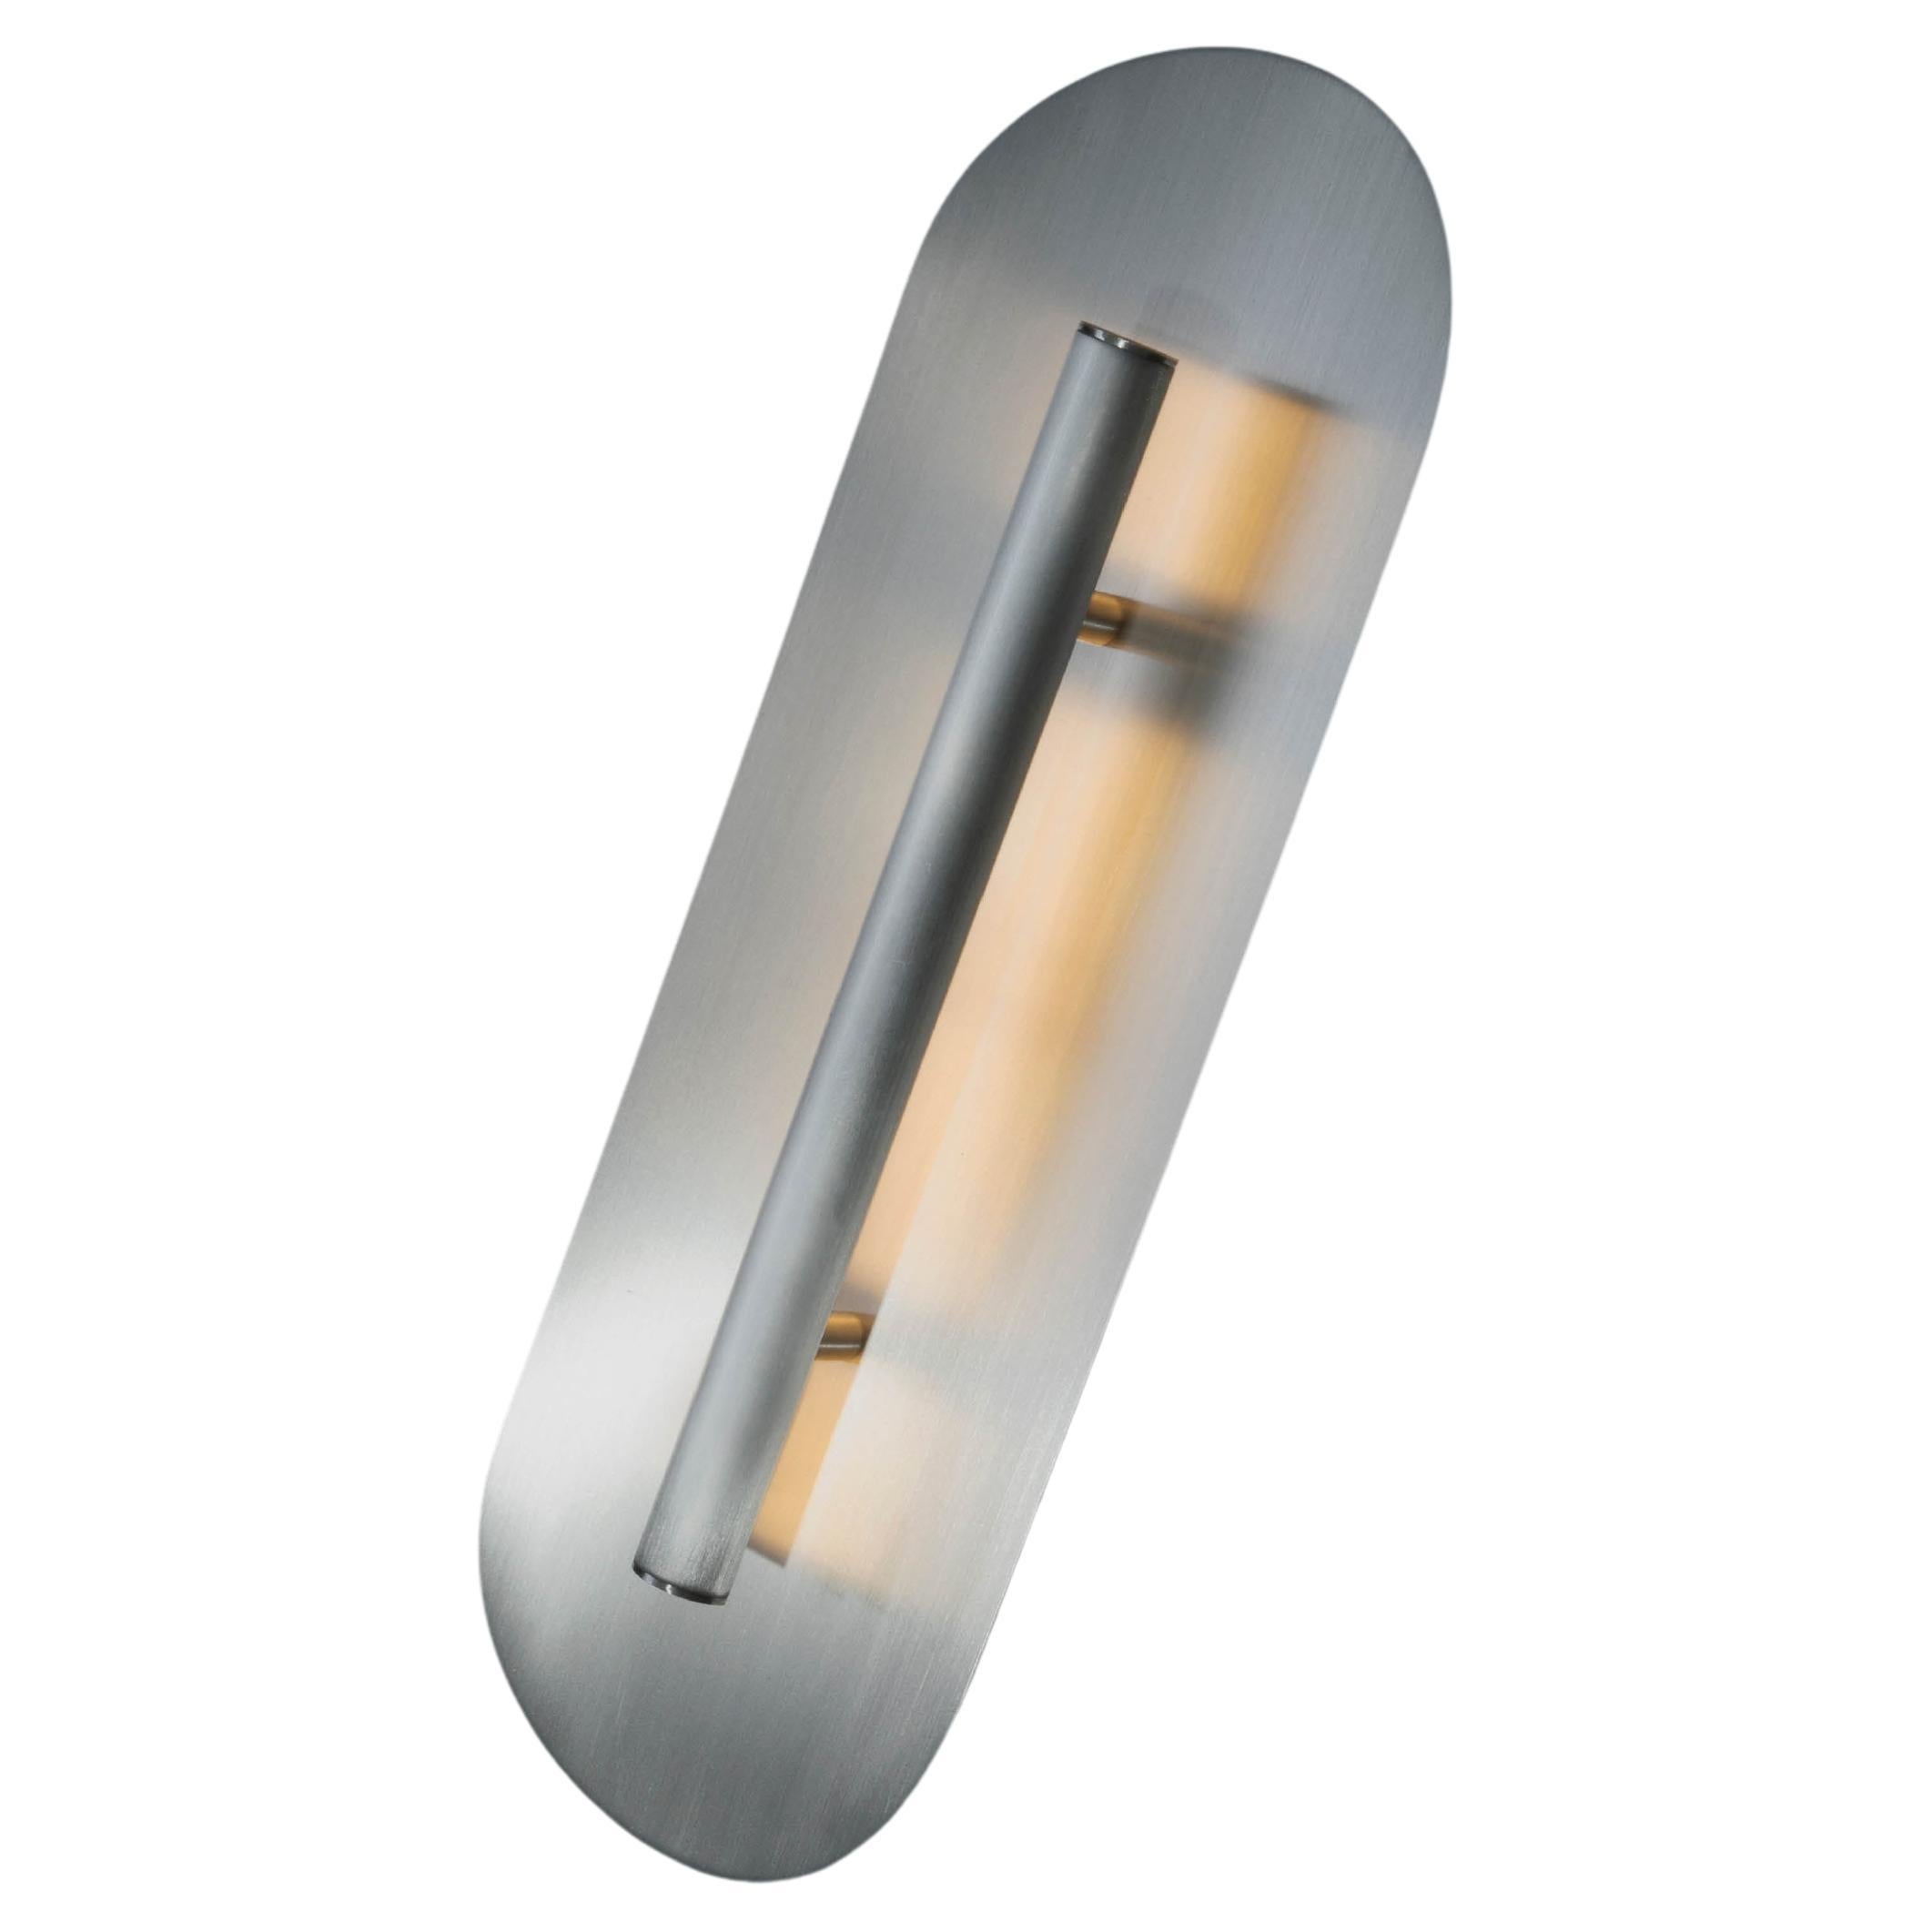 Reflektor-Wandleuchte 450, LED-Leuchte, Roh gebürstetes Aluminium Metall im Angebot